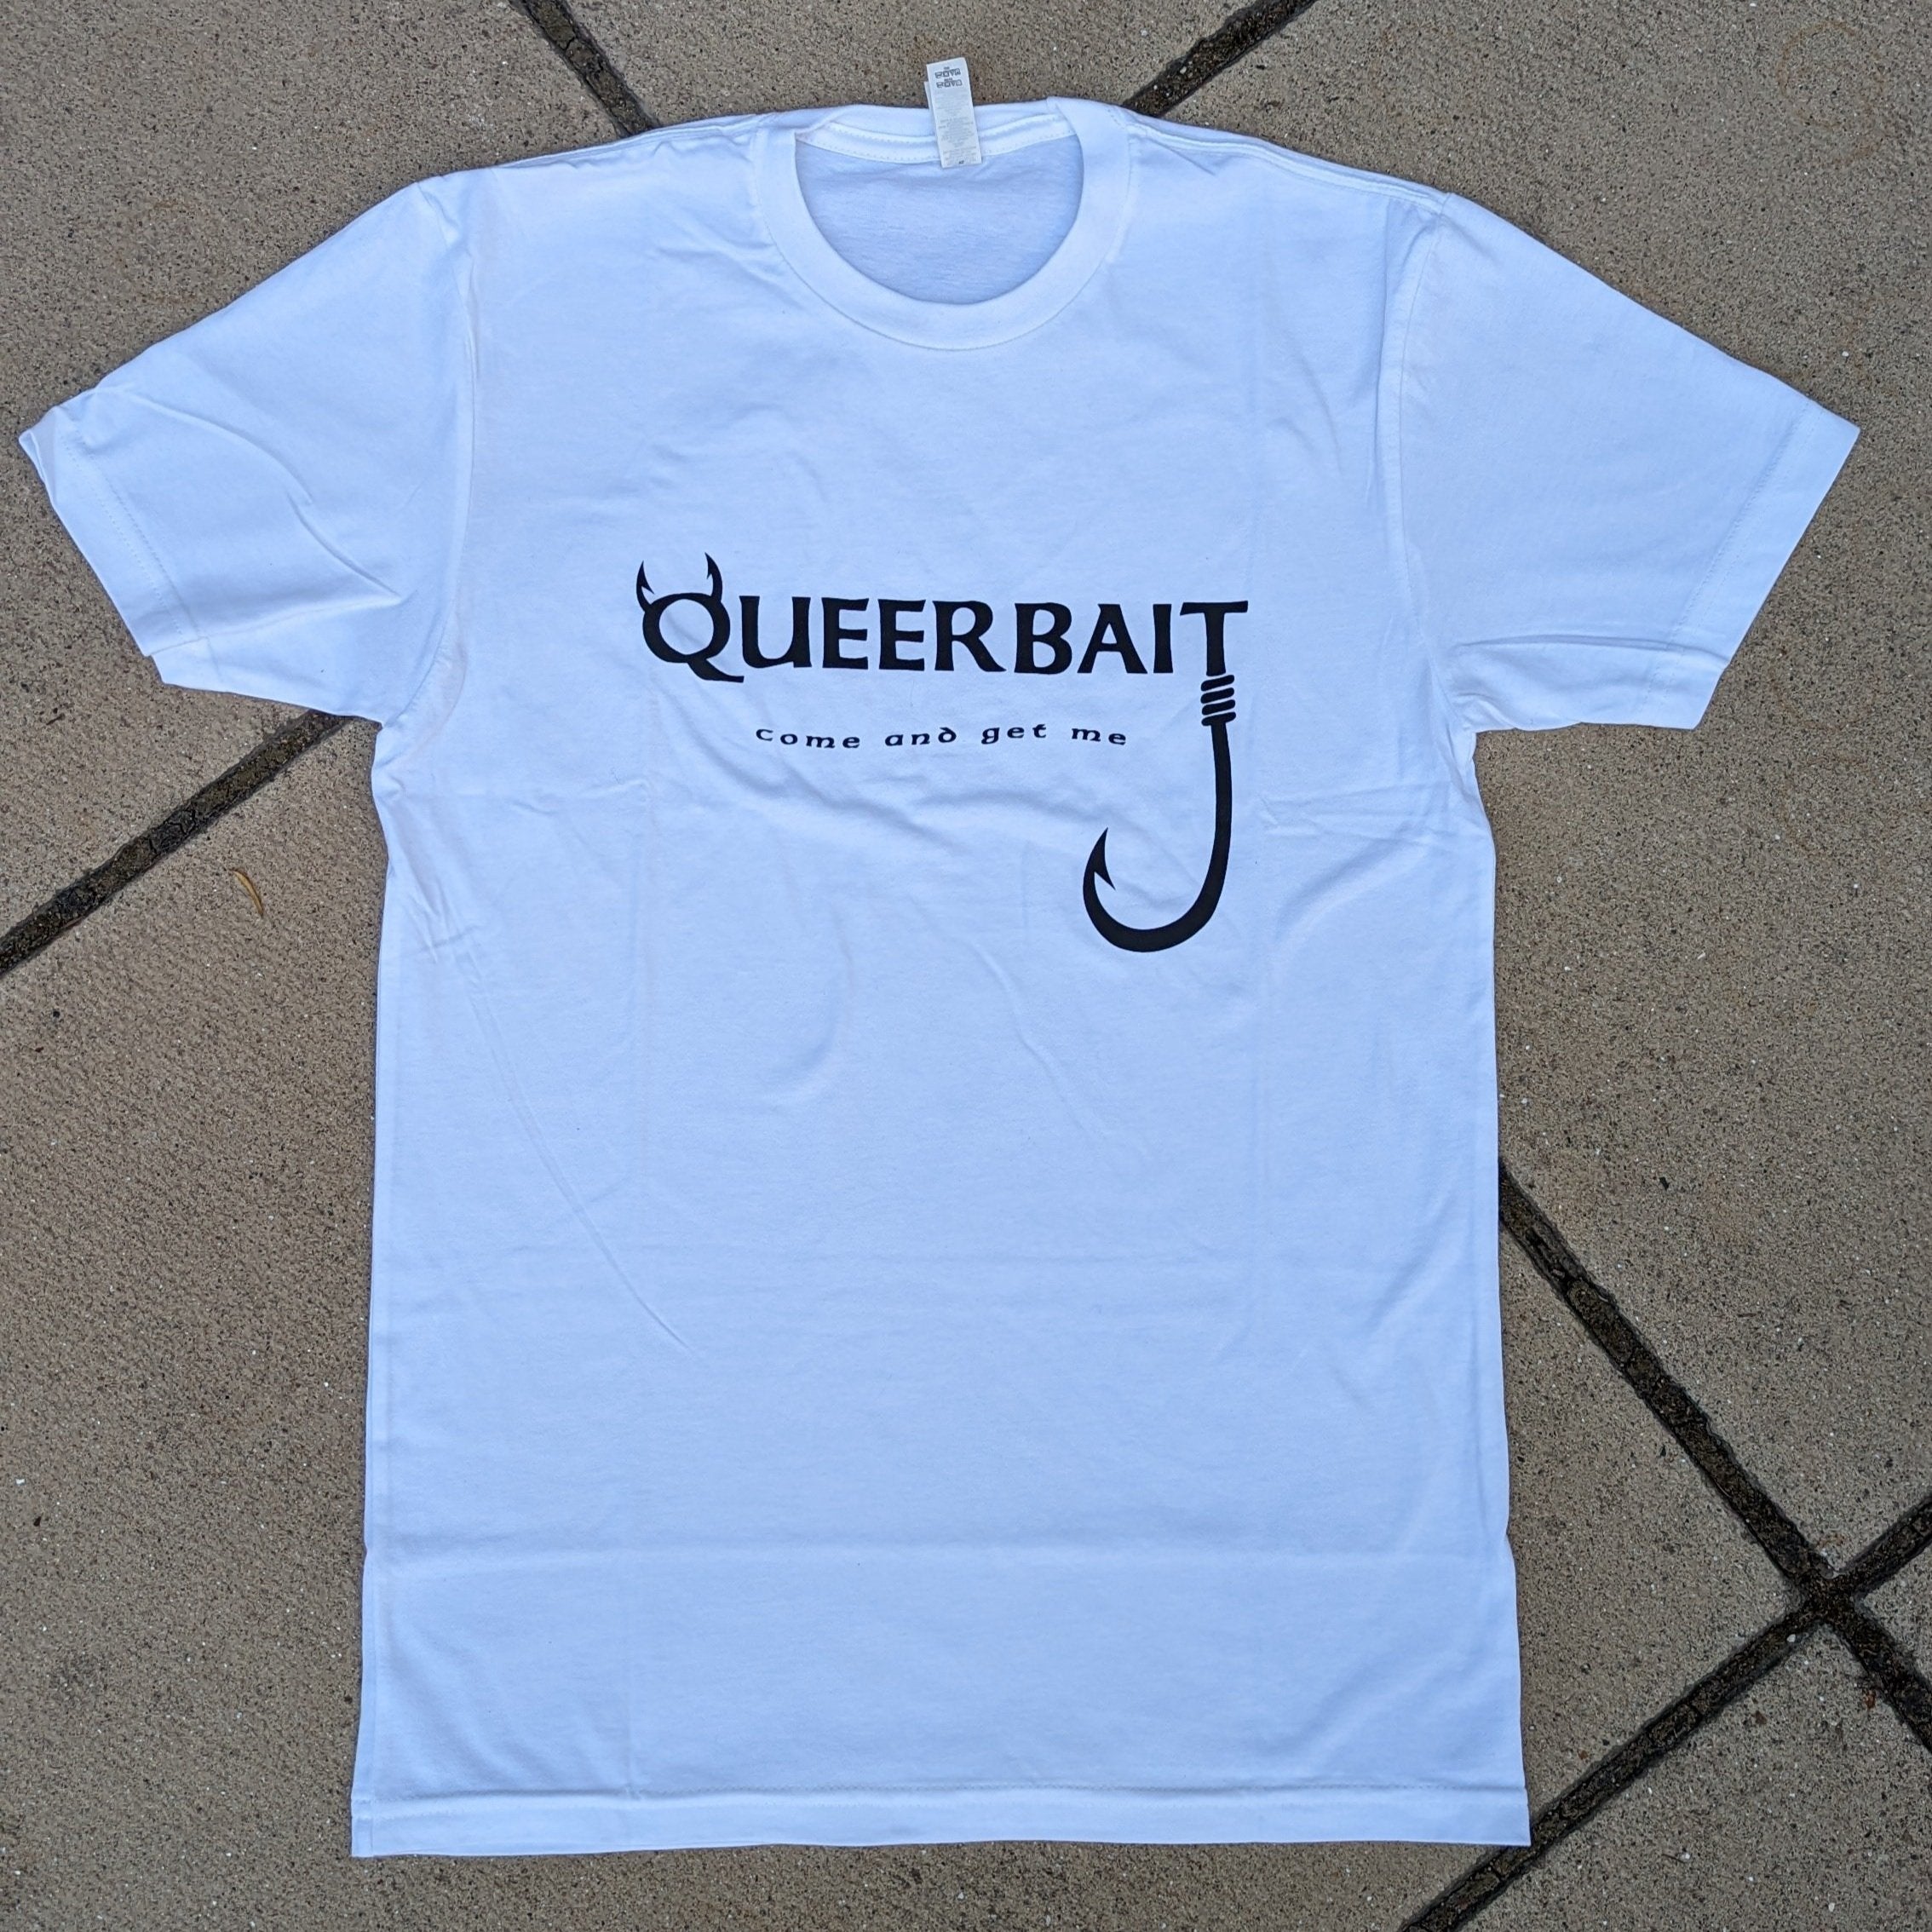 Queerbait - Flirty, Sexy Gay Tee Shirt